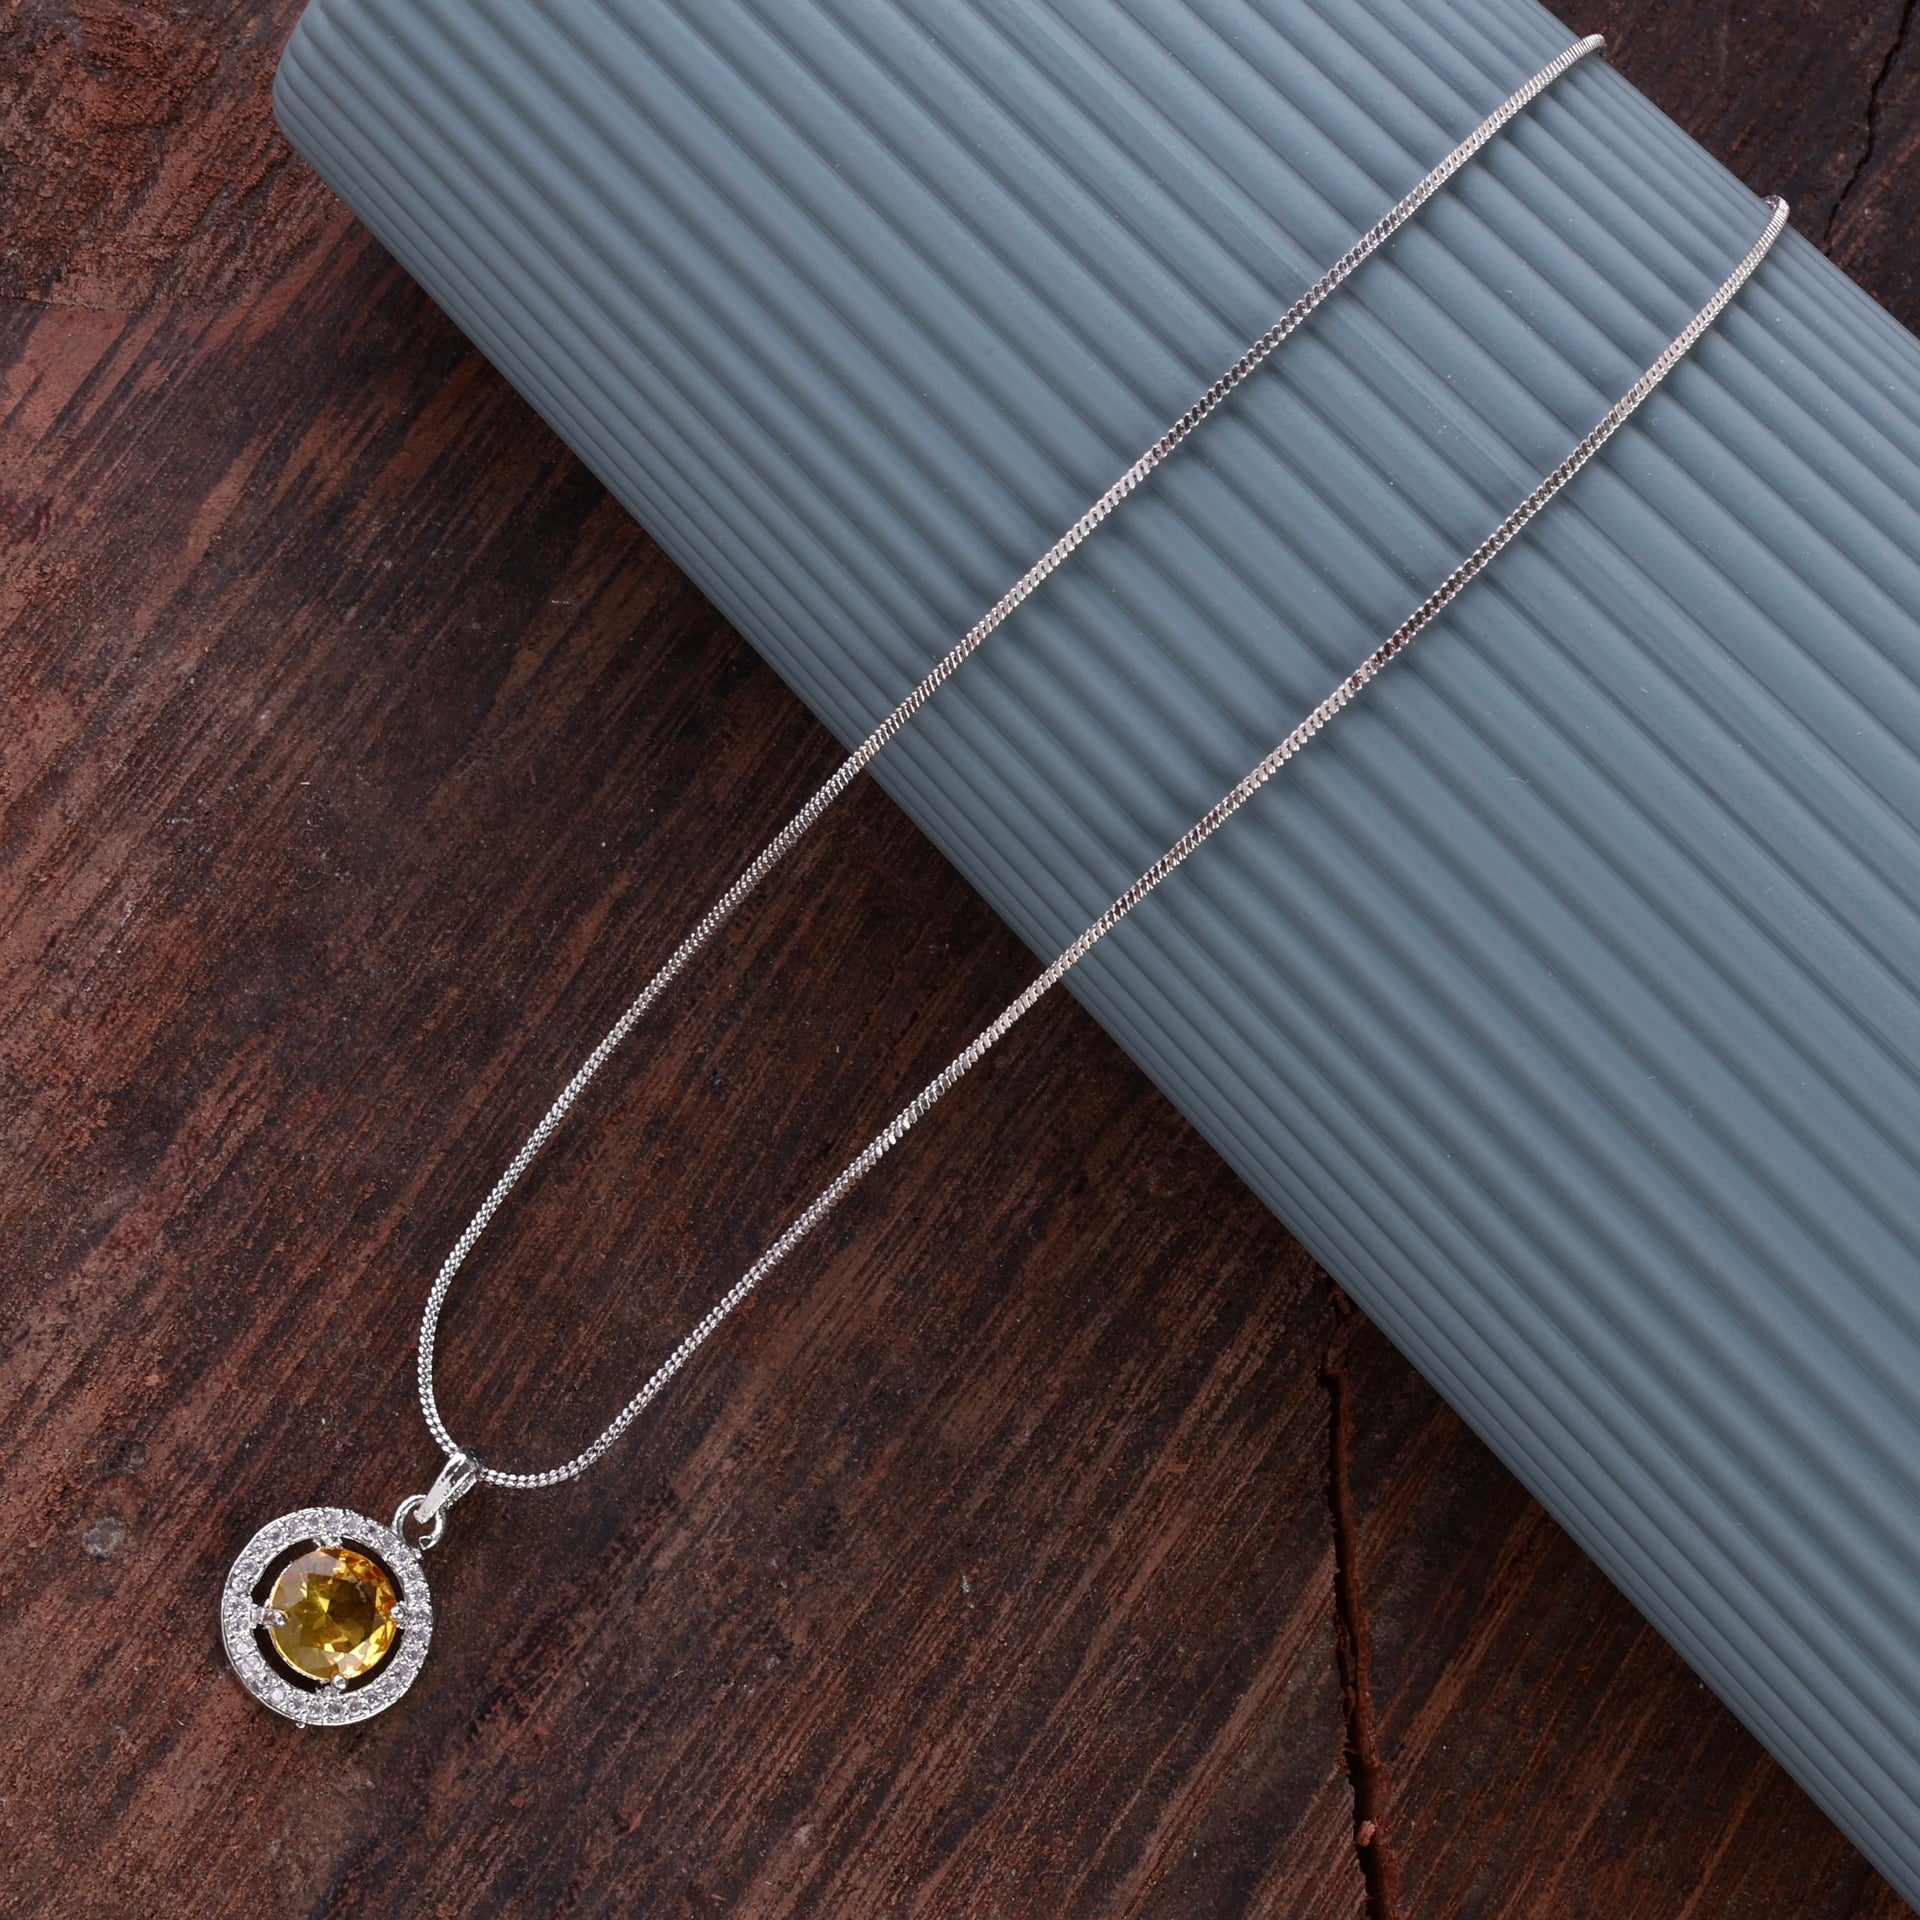 Yellow Jack American Diamond Pendant with Chain